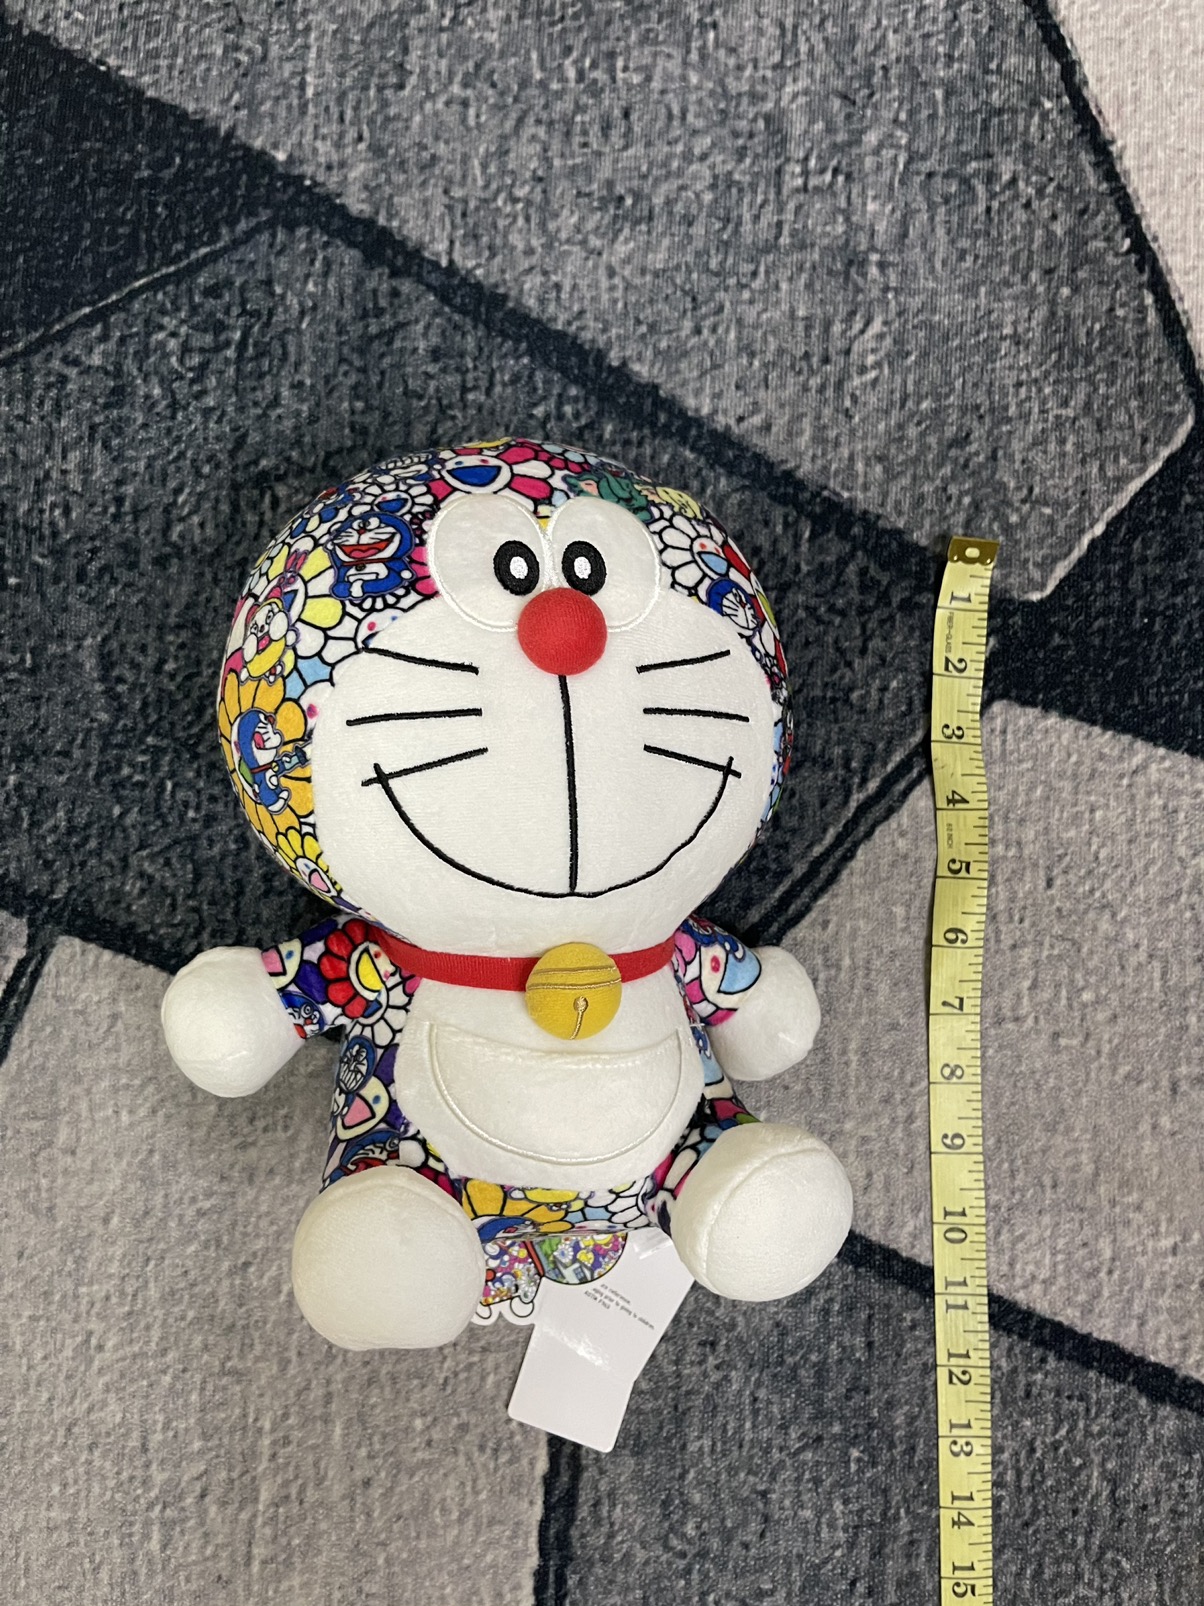 Issey Miyake - Rare Takashi Murakami Doraemon Toys Limited Edition - 5